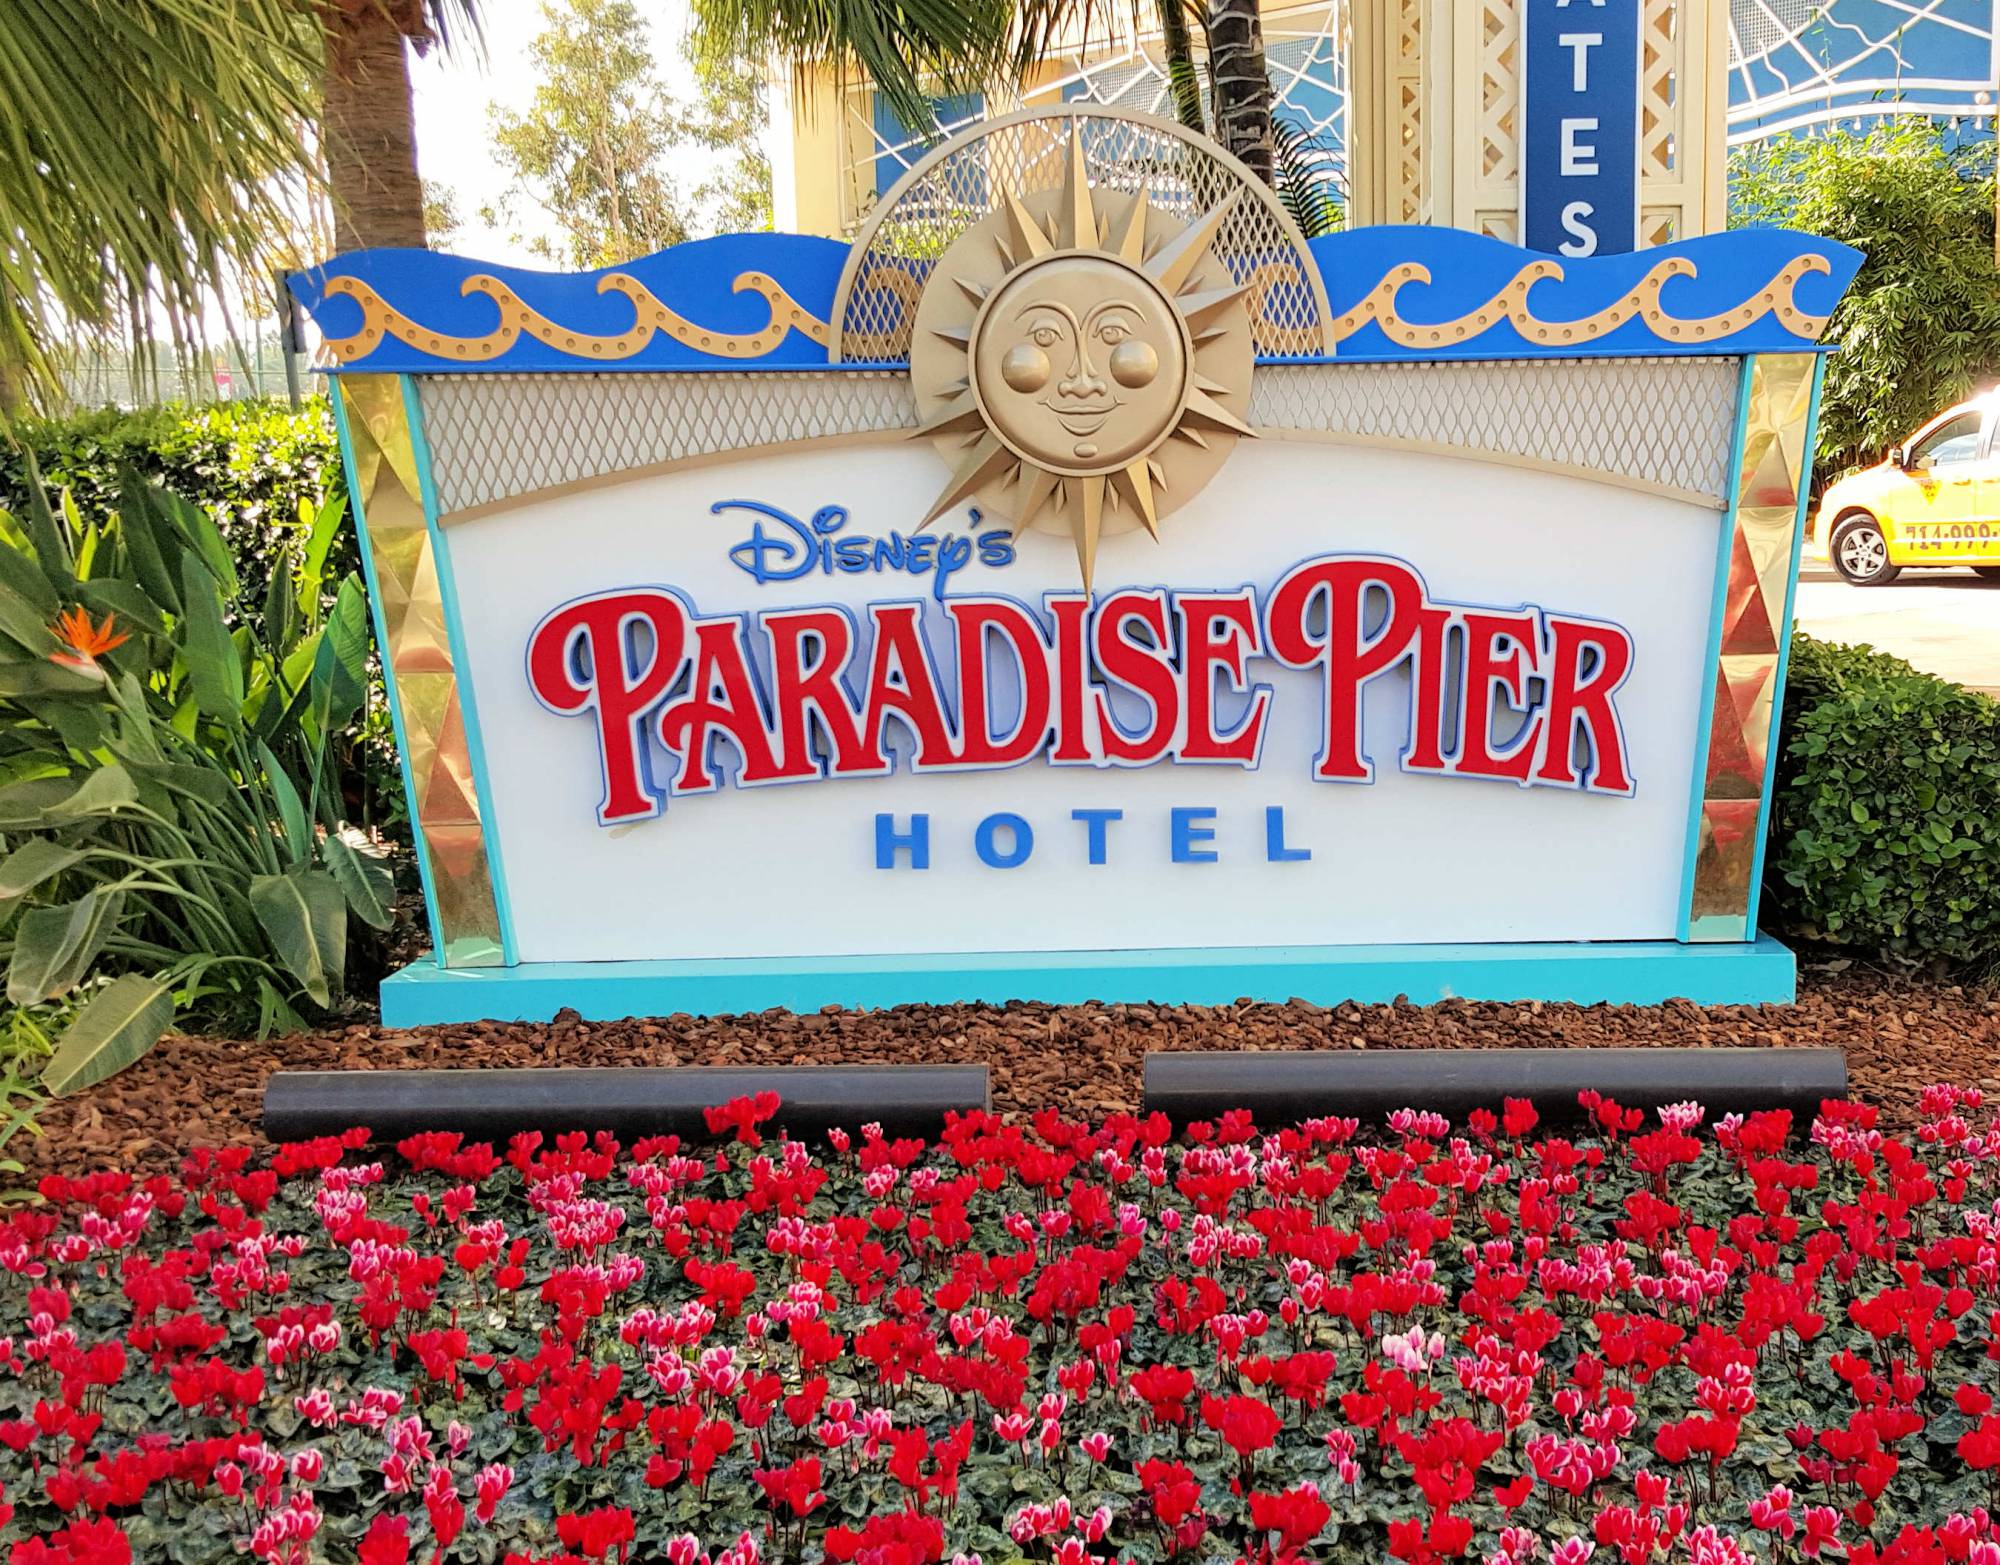 Disneyland Paradise Pier Hotel sign